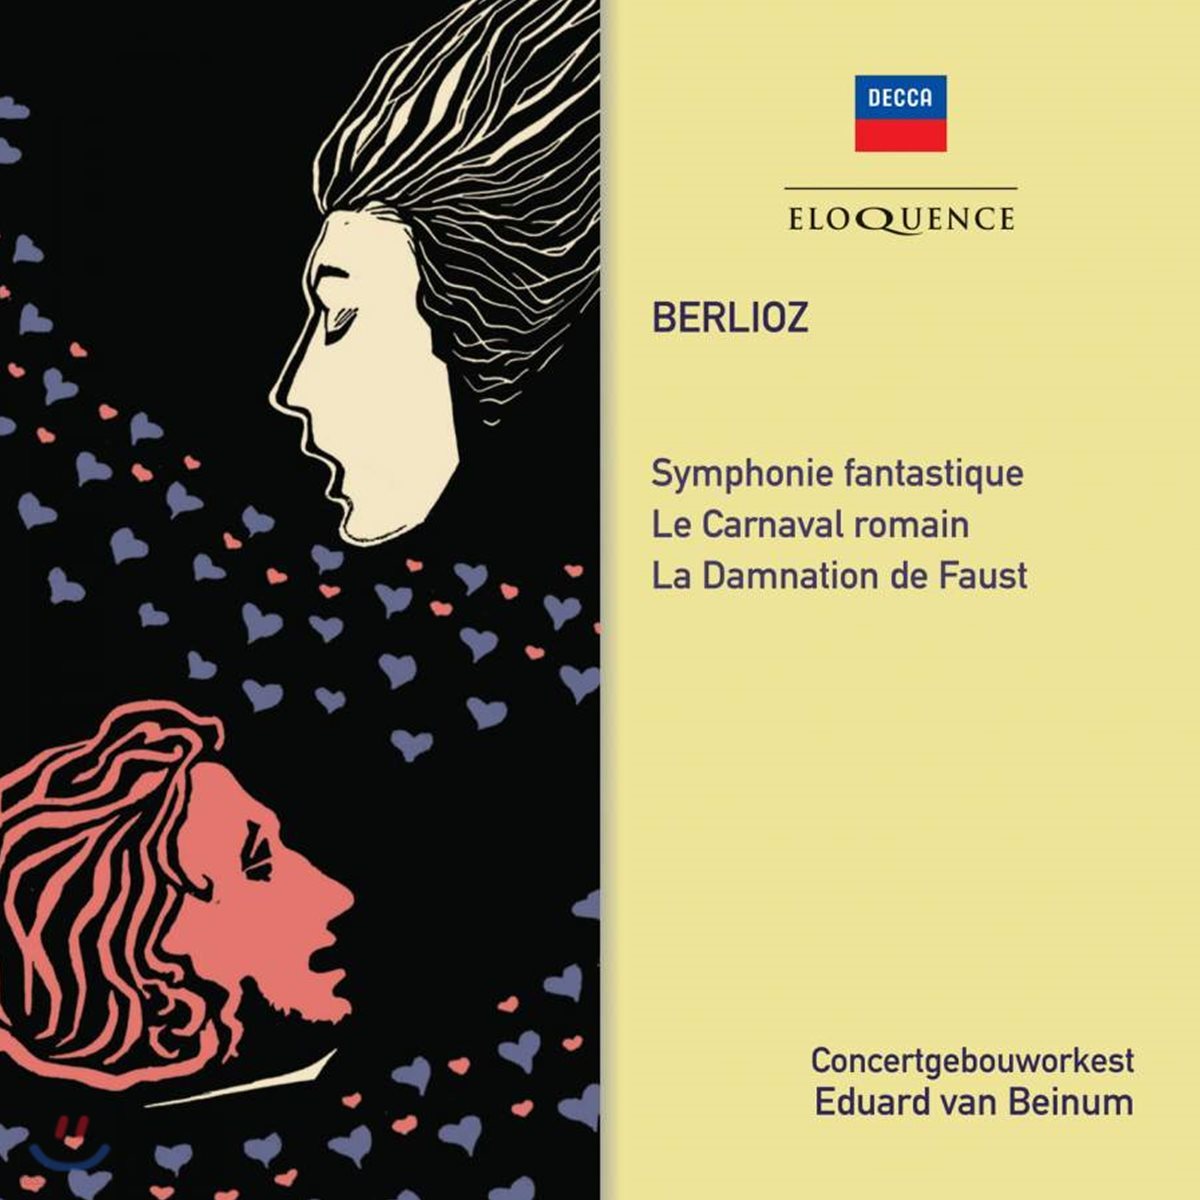 Eduard van Beinum 베를리오즈: 환상 교향곡, 파우스트의 겁벌 외 (Berlioz: Symphonie fantastique, La Damnation de Faust, Op. 24)